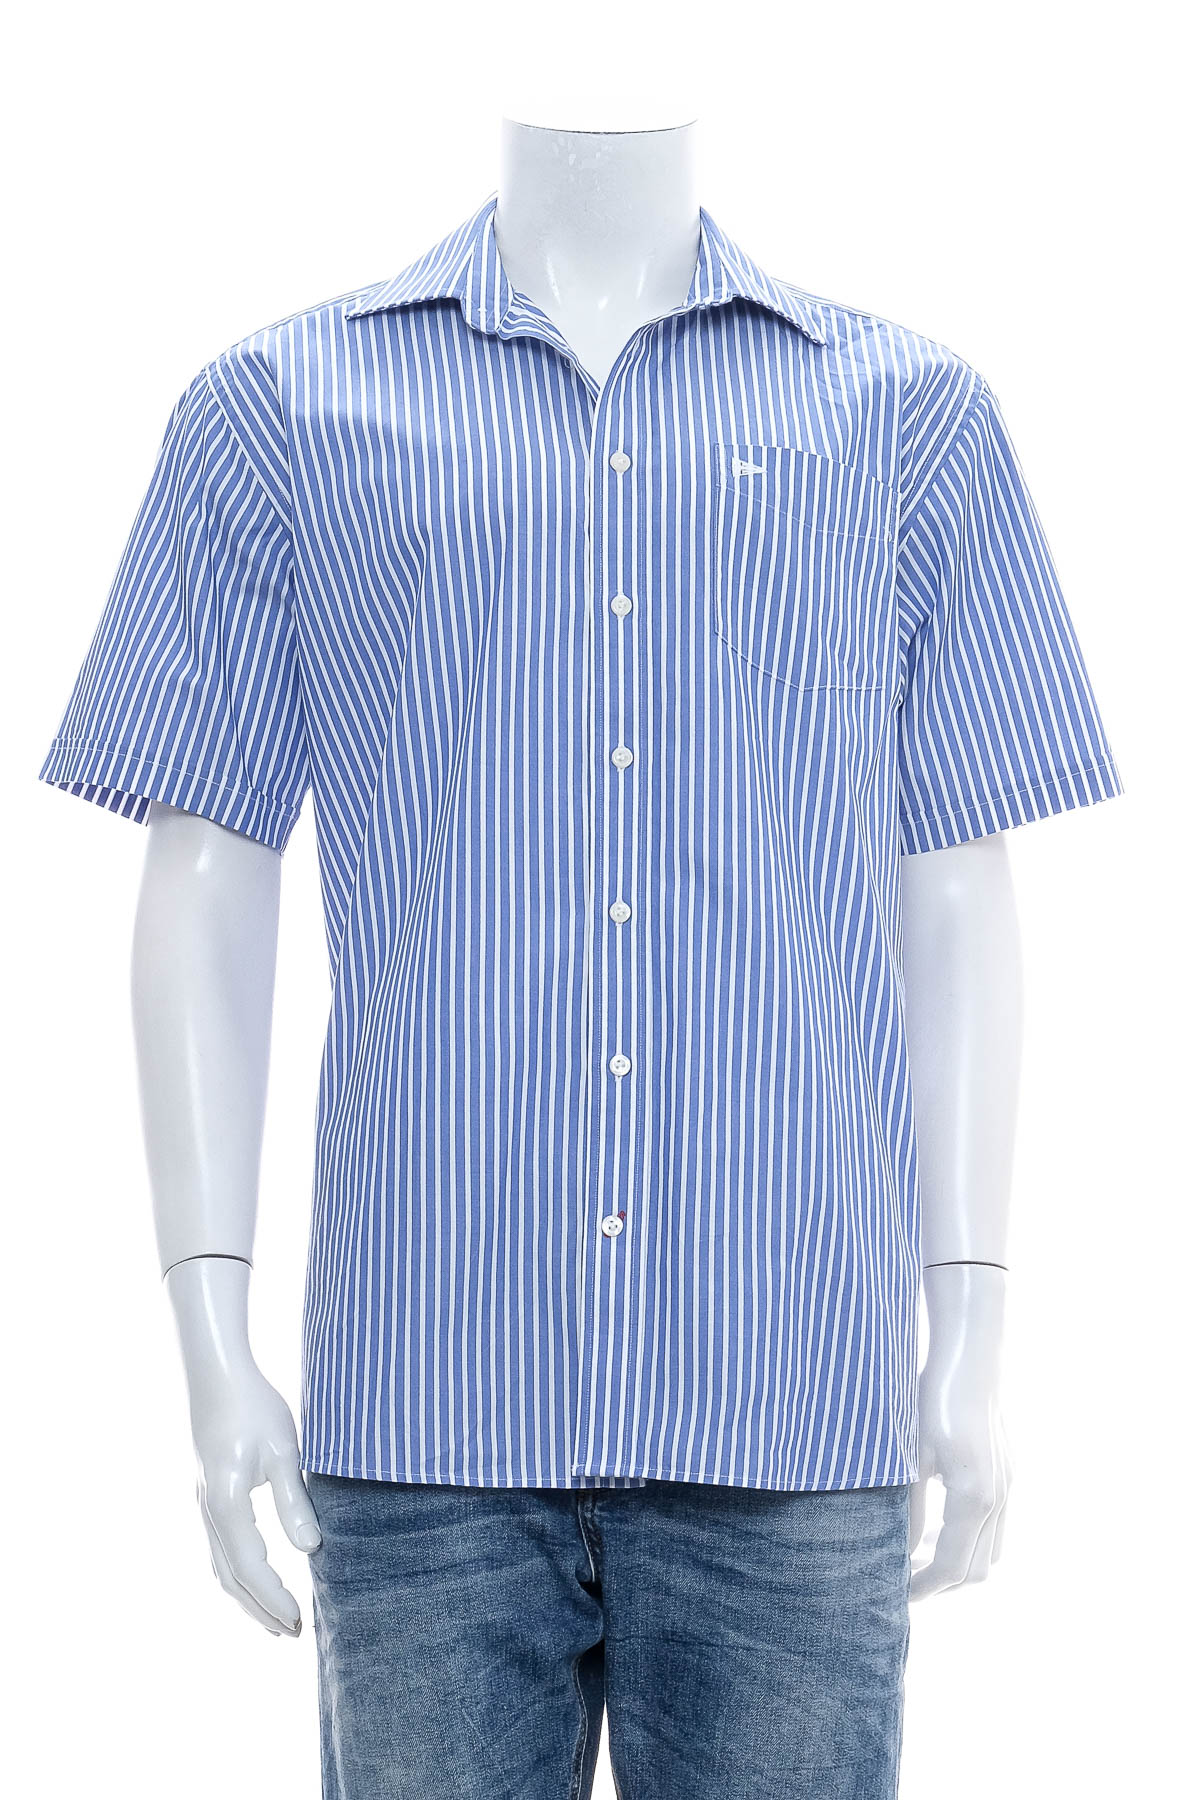 Men's shirt - Paul R. Smith - 0